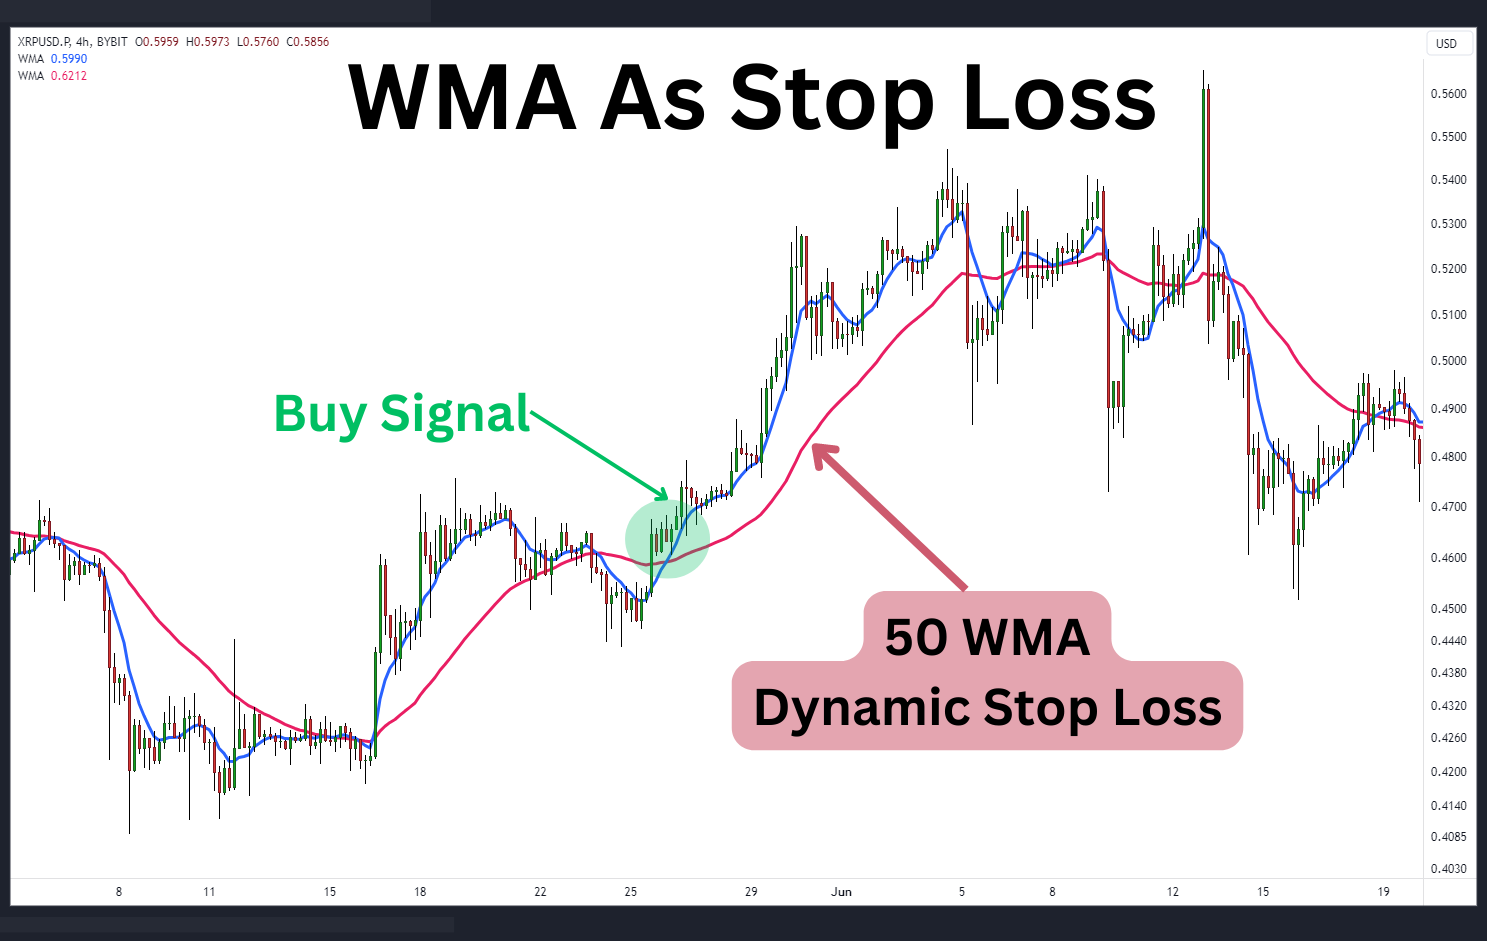 50 WMA as dynamic stop loss